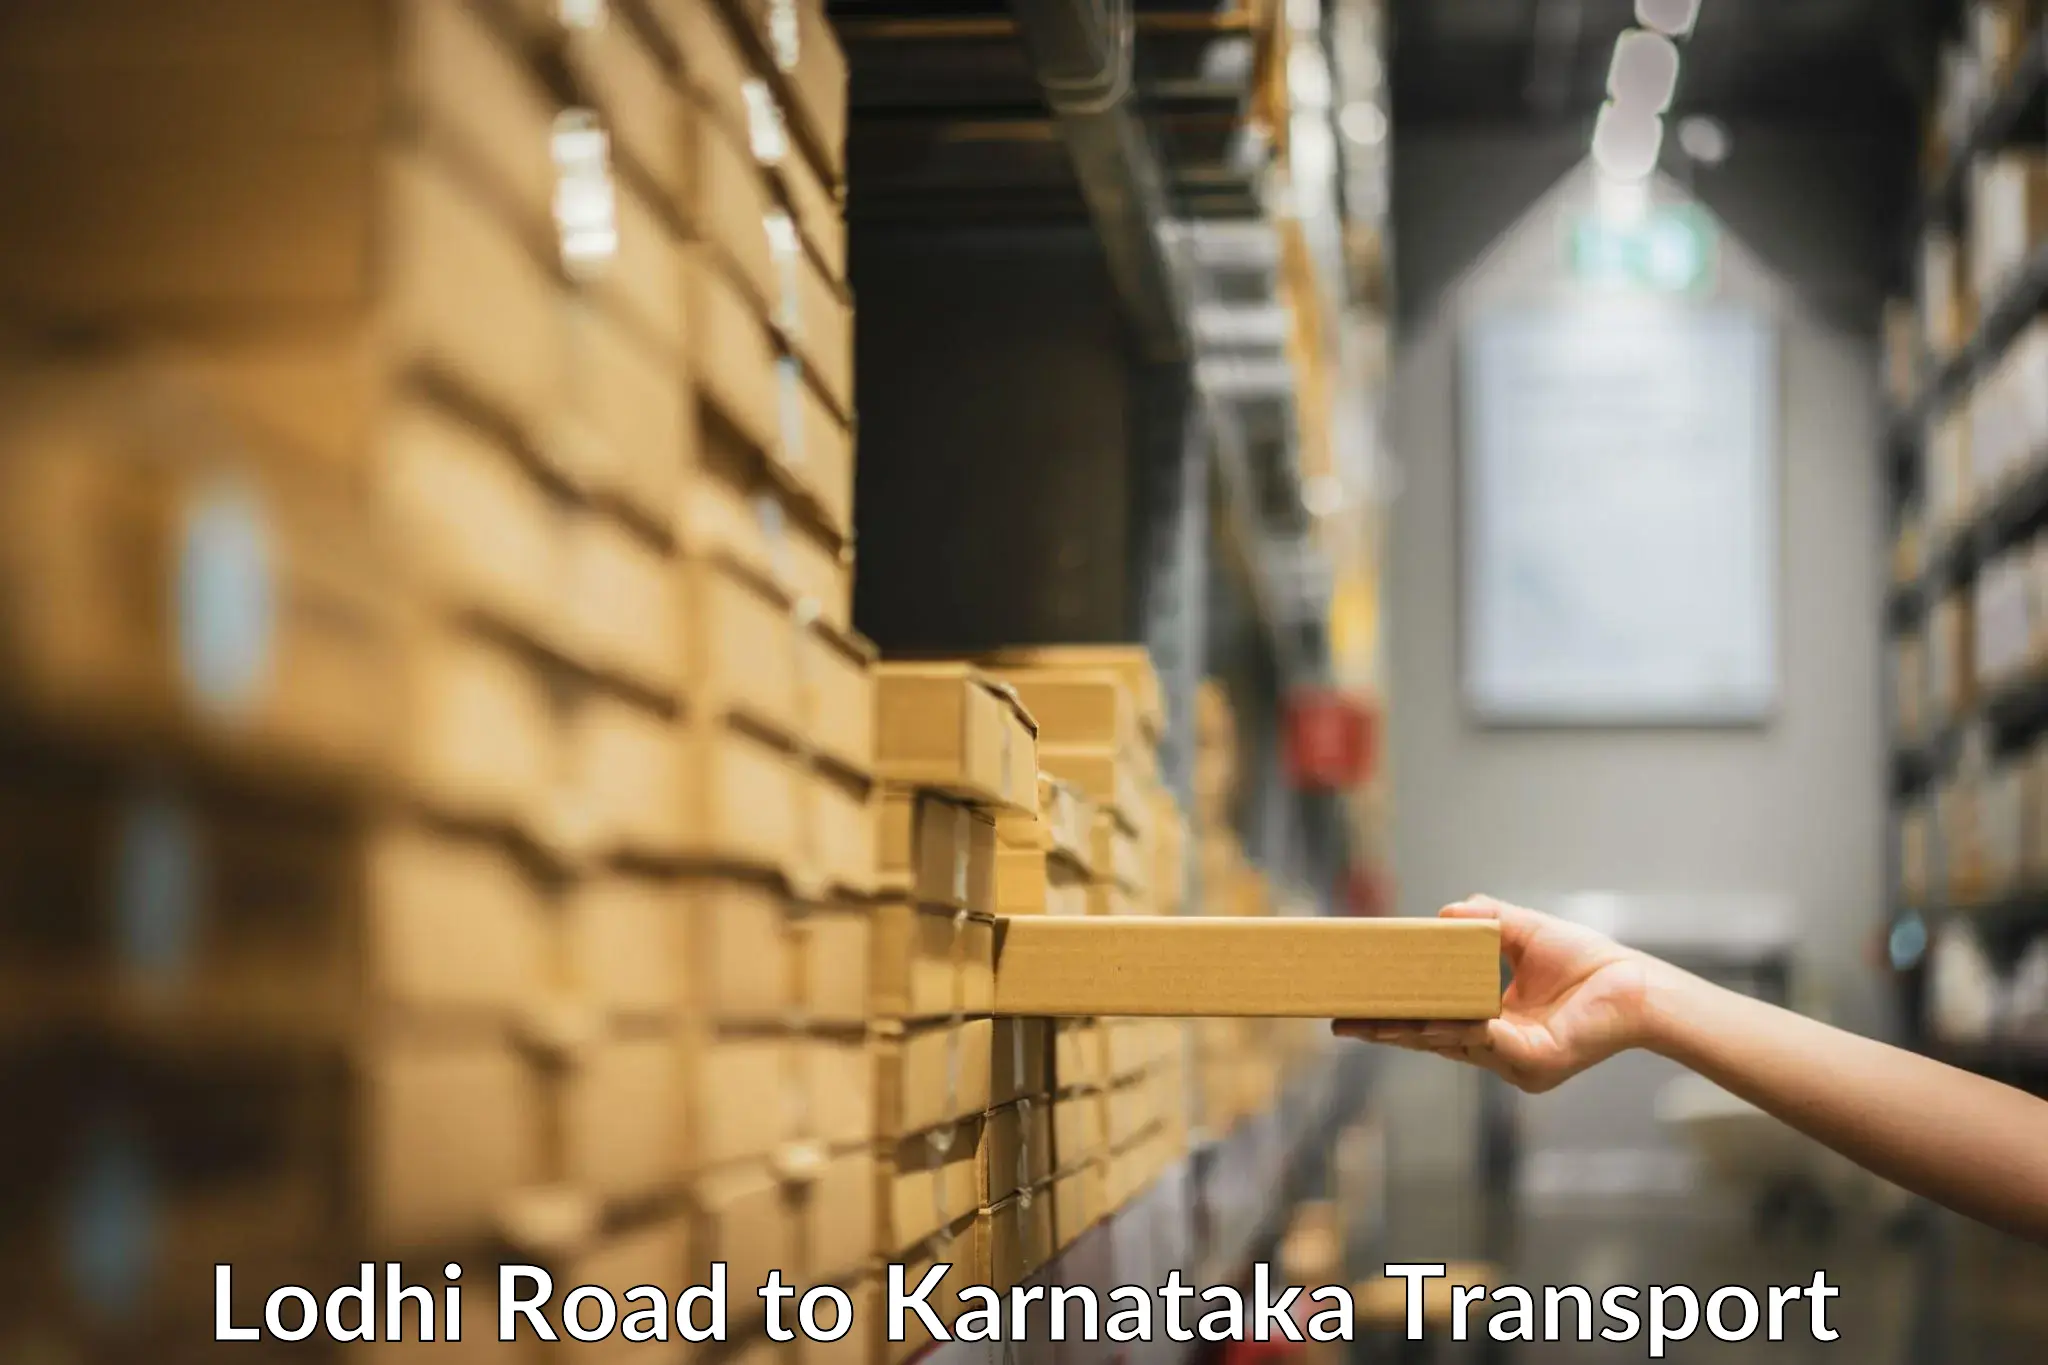 Commercial transport service Lodhi Road to Karnataka